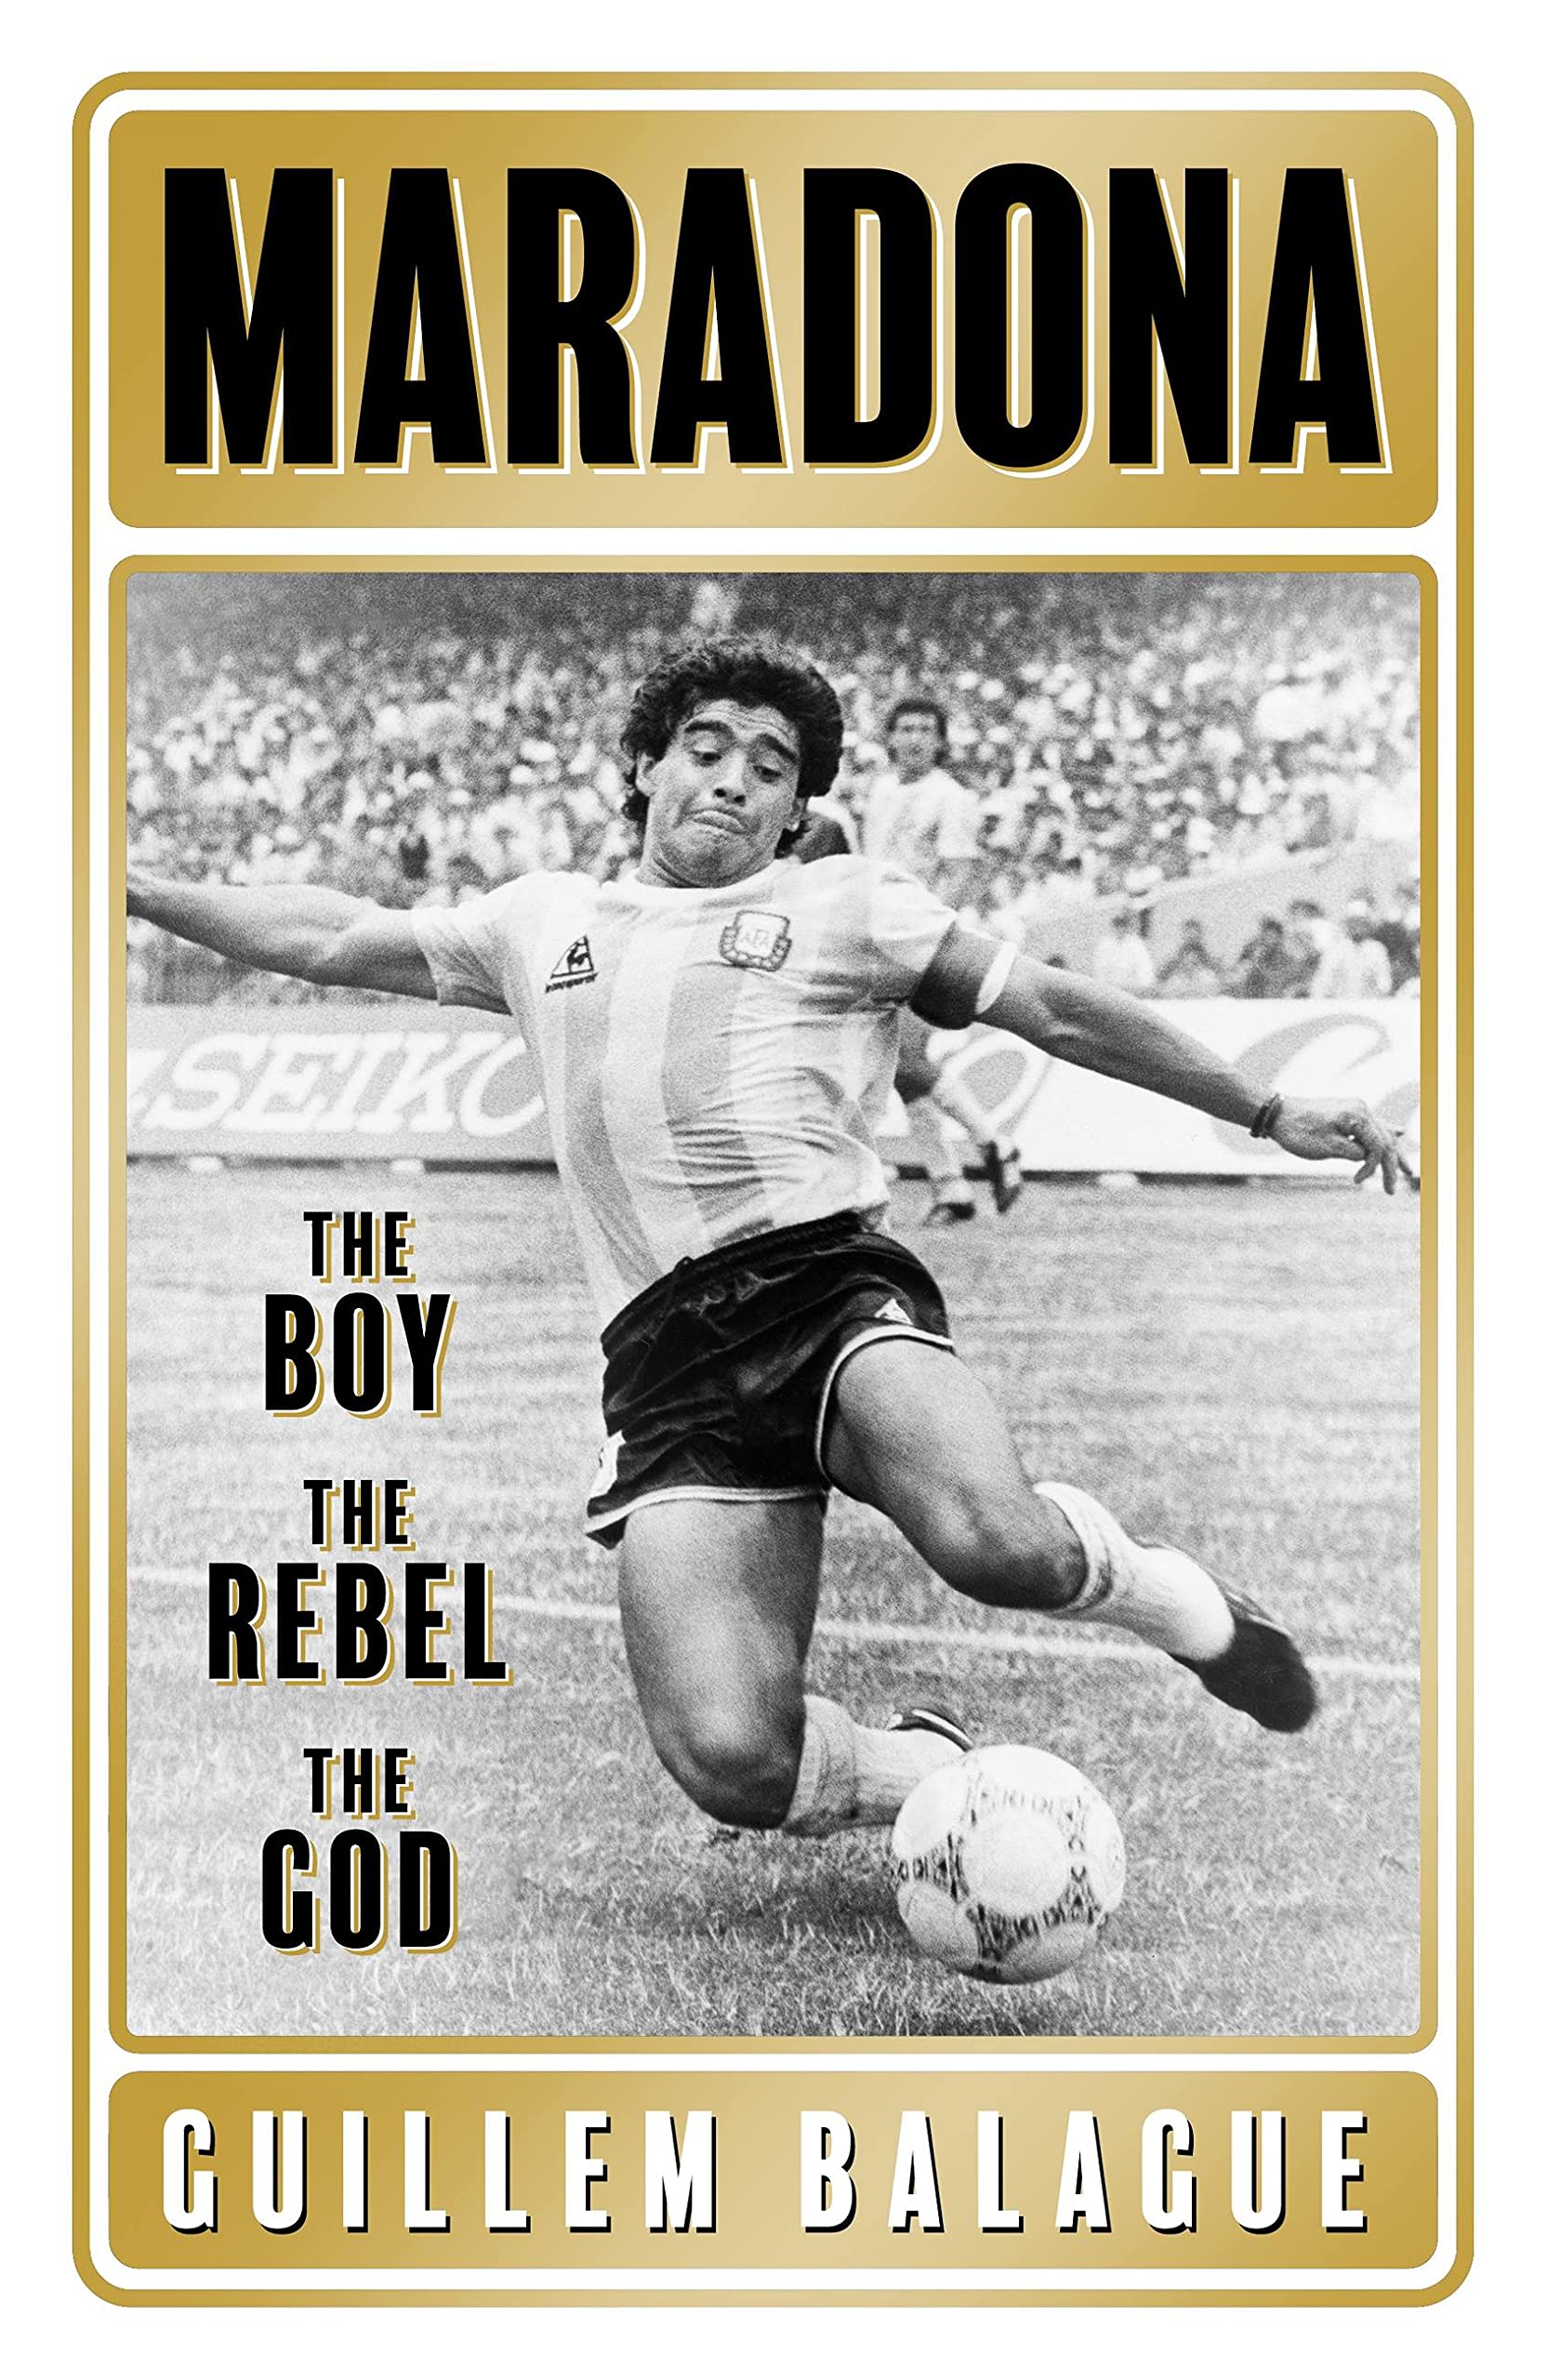 diego-armando-maradona-libri---immagini-Maradona